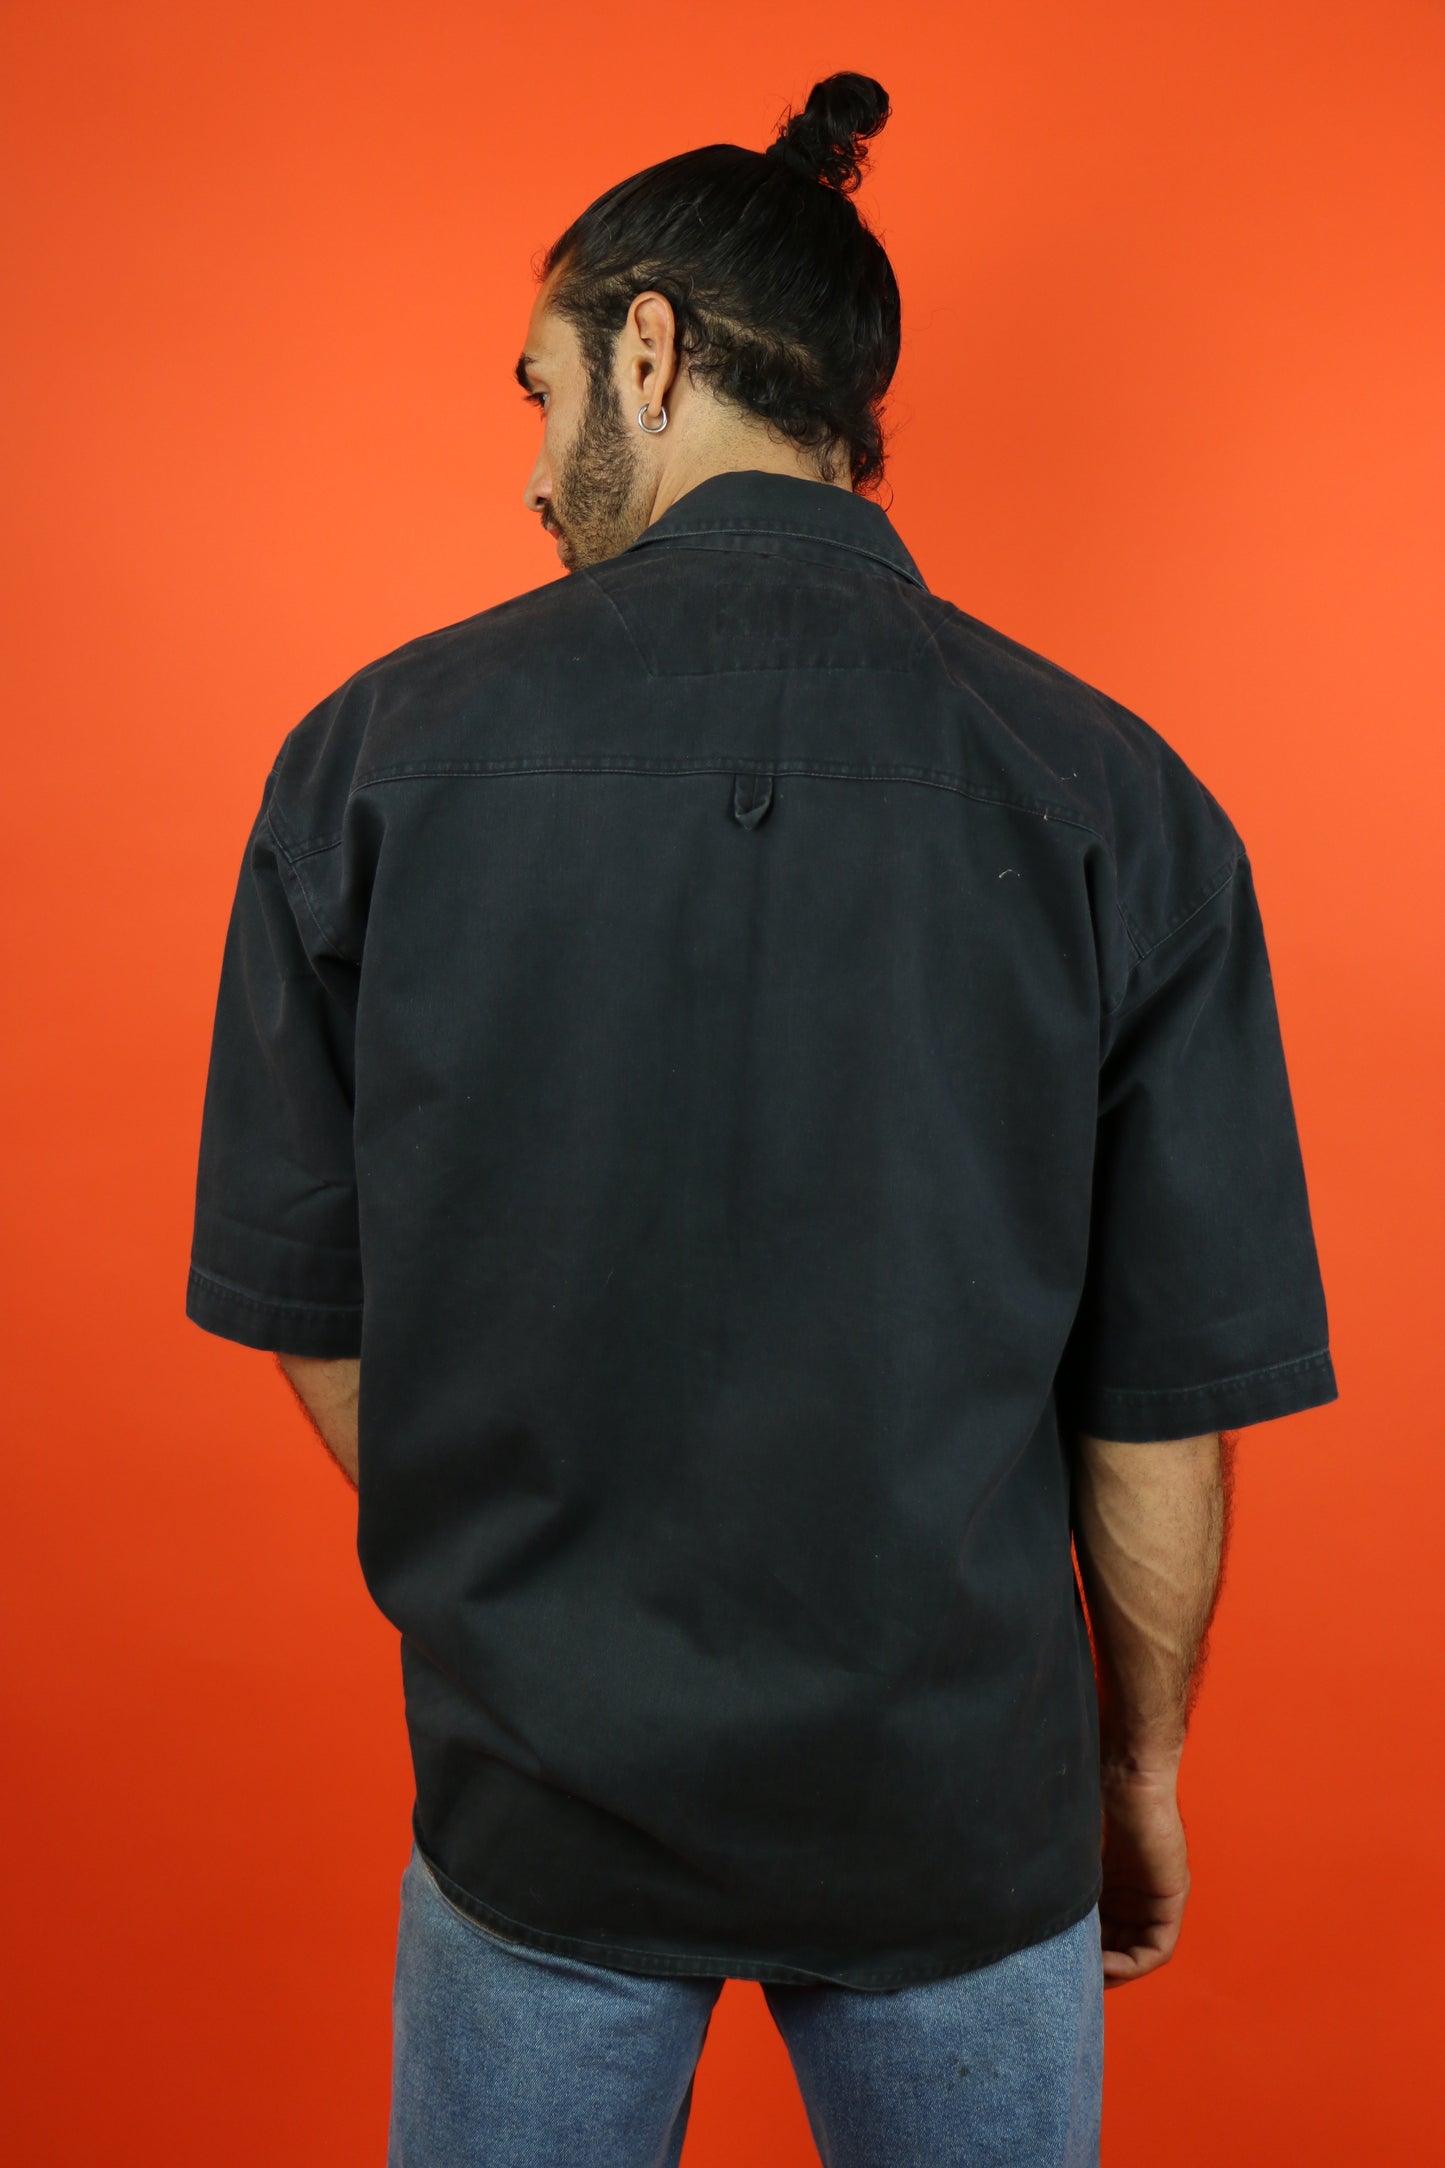 Levis Shirt Short Sleeves - vintage clothing clochard92.com